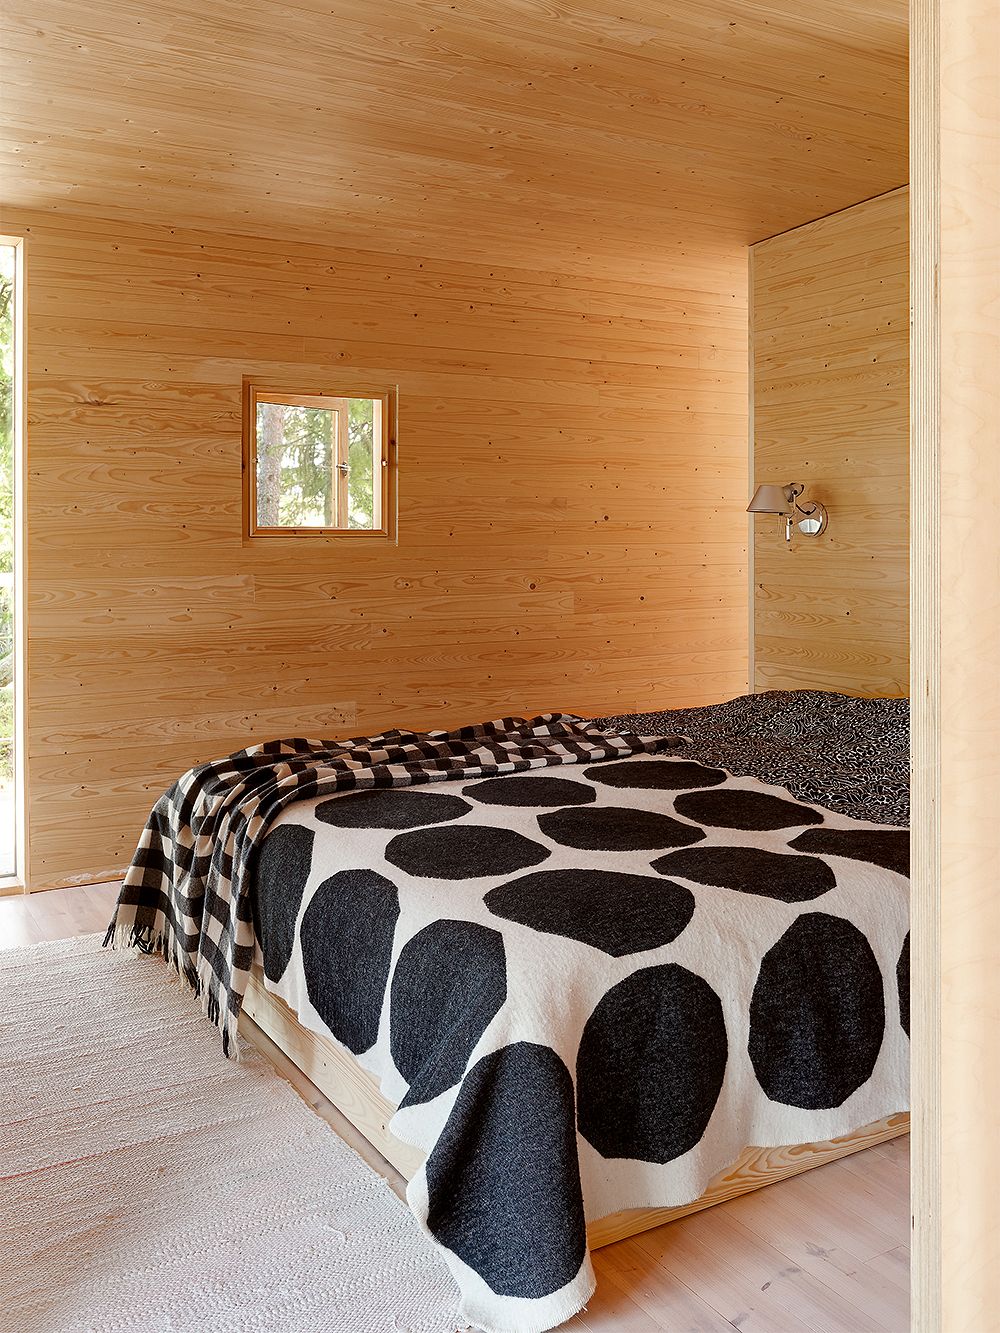 MInna Kemell-Kutvonen's summer cabin